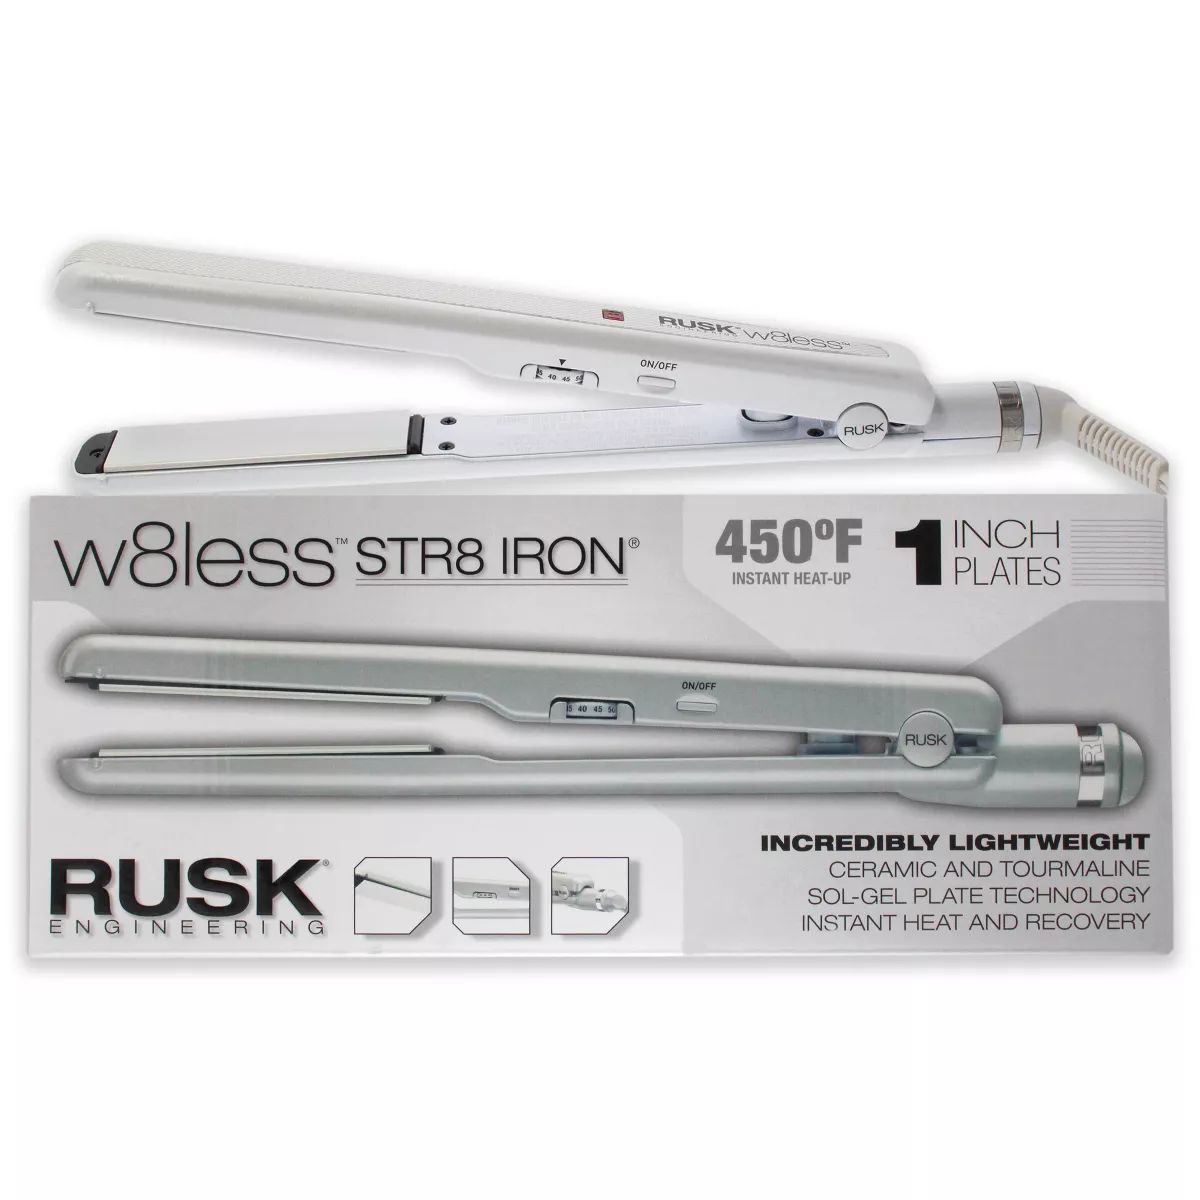 Rusk W8less Str8 Iron Ceramic and Tourmaline Flat Iron - IREW8LS2510 - White - 1 Inch Flat Iron | Target